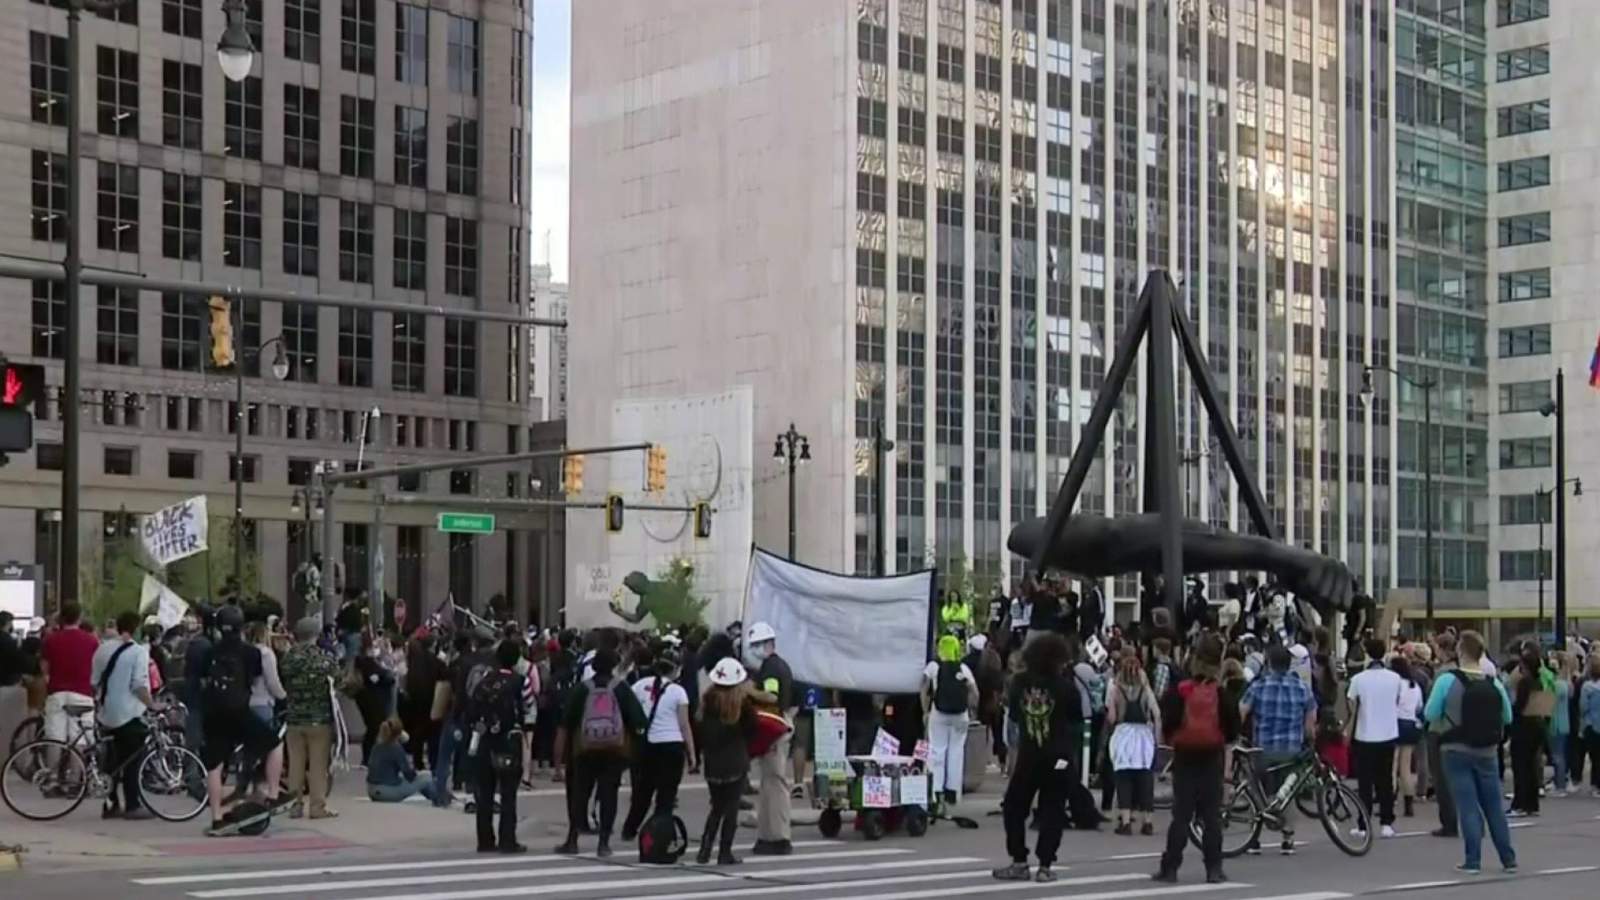 Protesters announce new demands, public tribunal for Detroit leaders